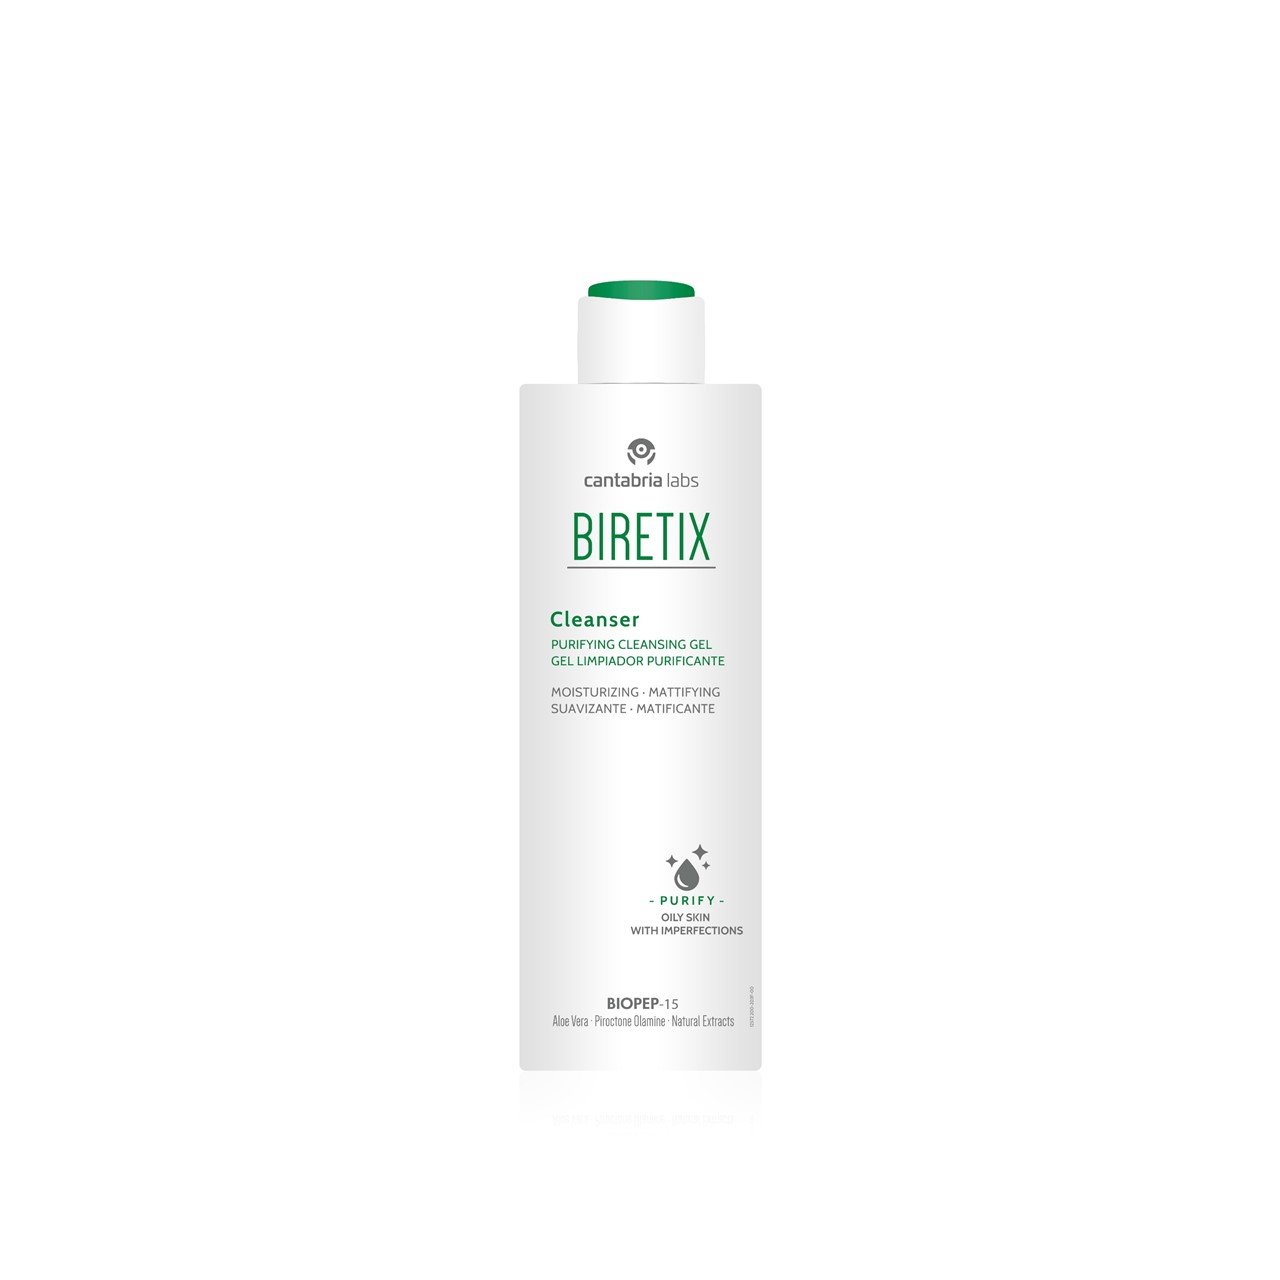 Biretix Cleanser Purifying Cleansing Gel 200ml (6.76floz)